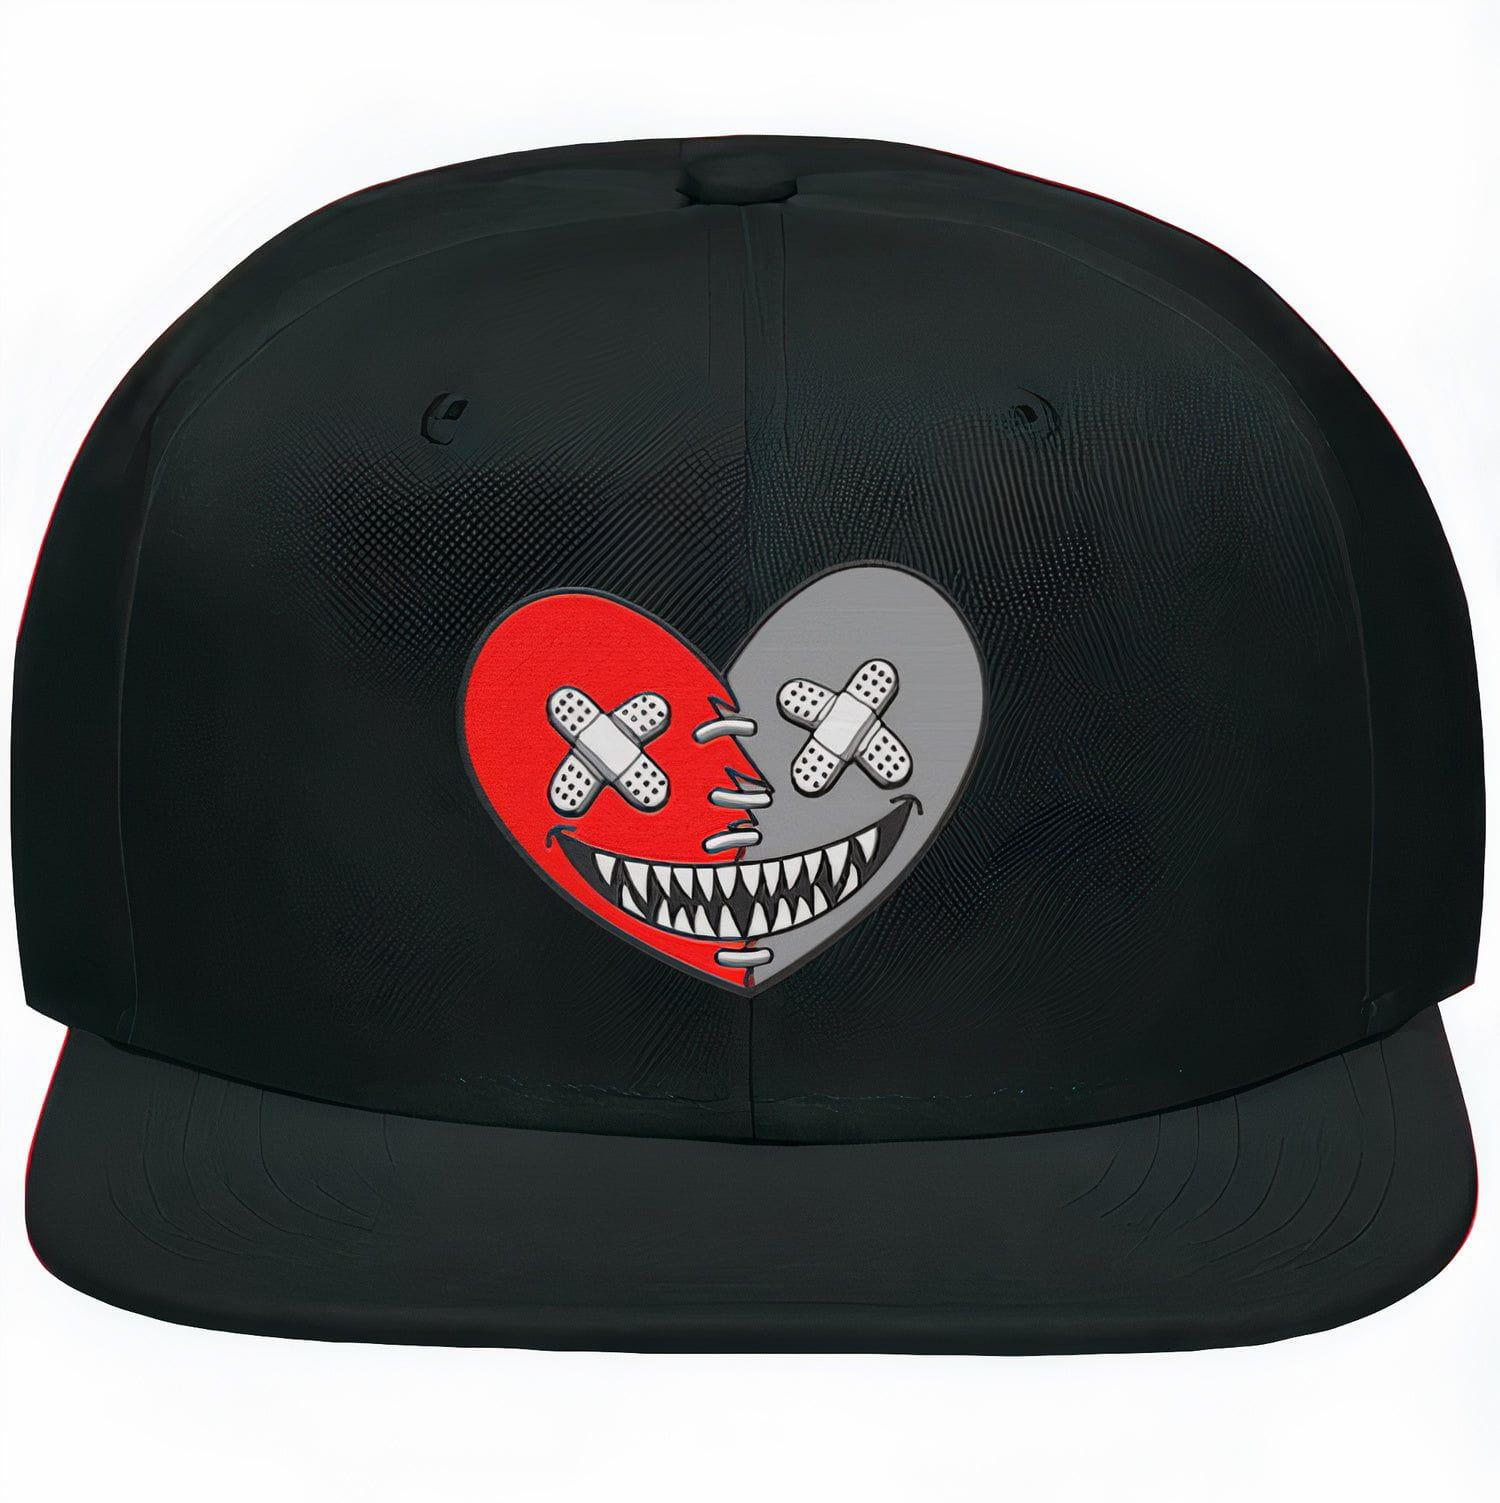 Red Cement 4s Snapback Hat - Jordan 4 Cement Hats - Heart